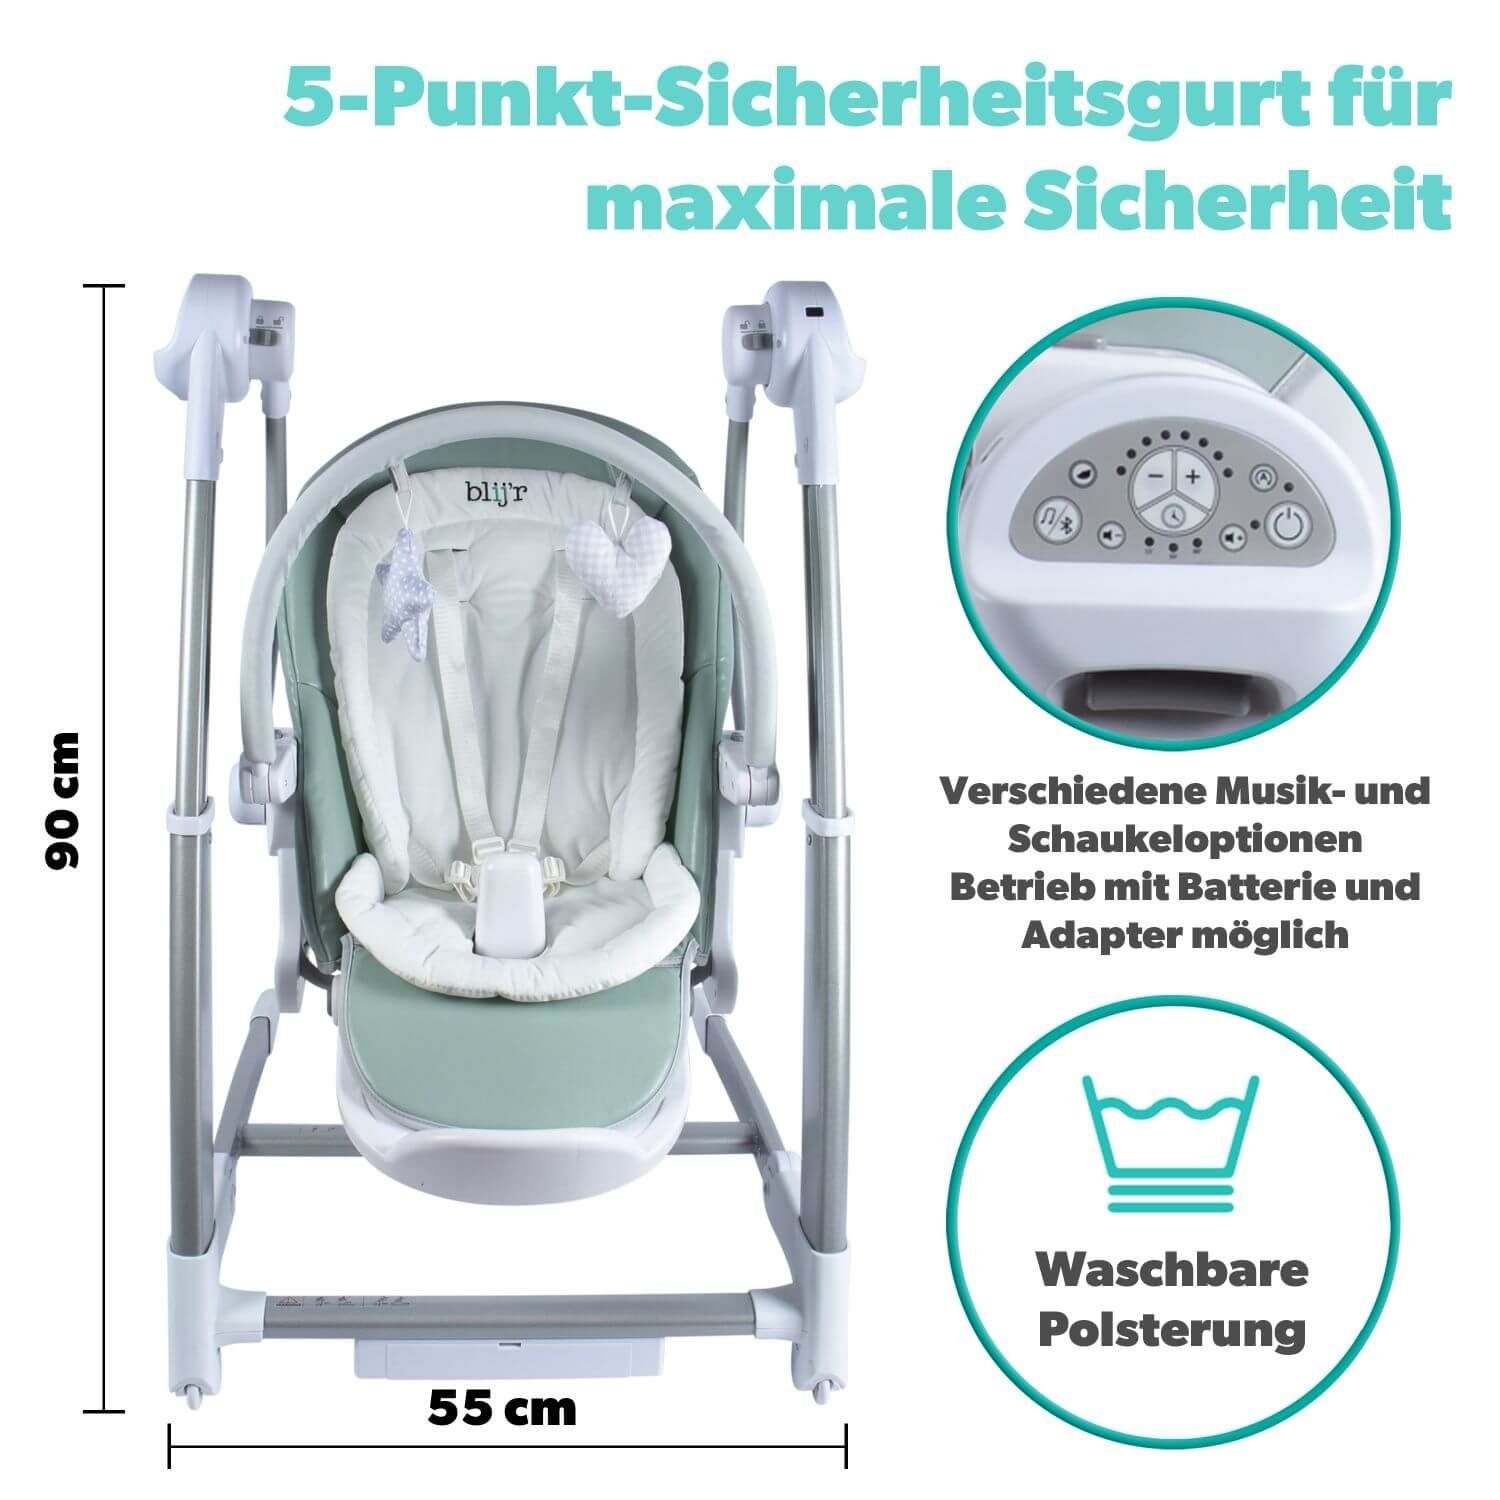 3in1 Blij´r Guusje Babywippe Kinderstuhl & Babyschaukel Hochstuhl, Esszimmerstuhl minzgrün